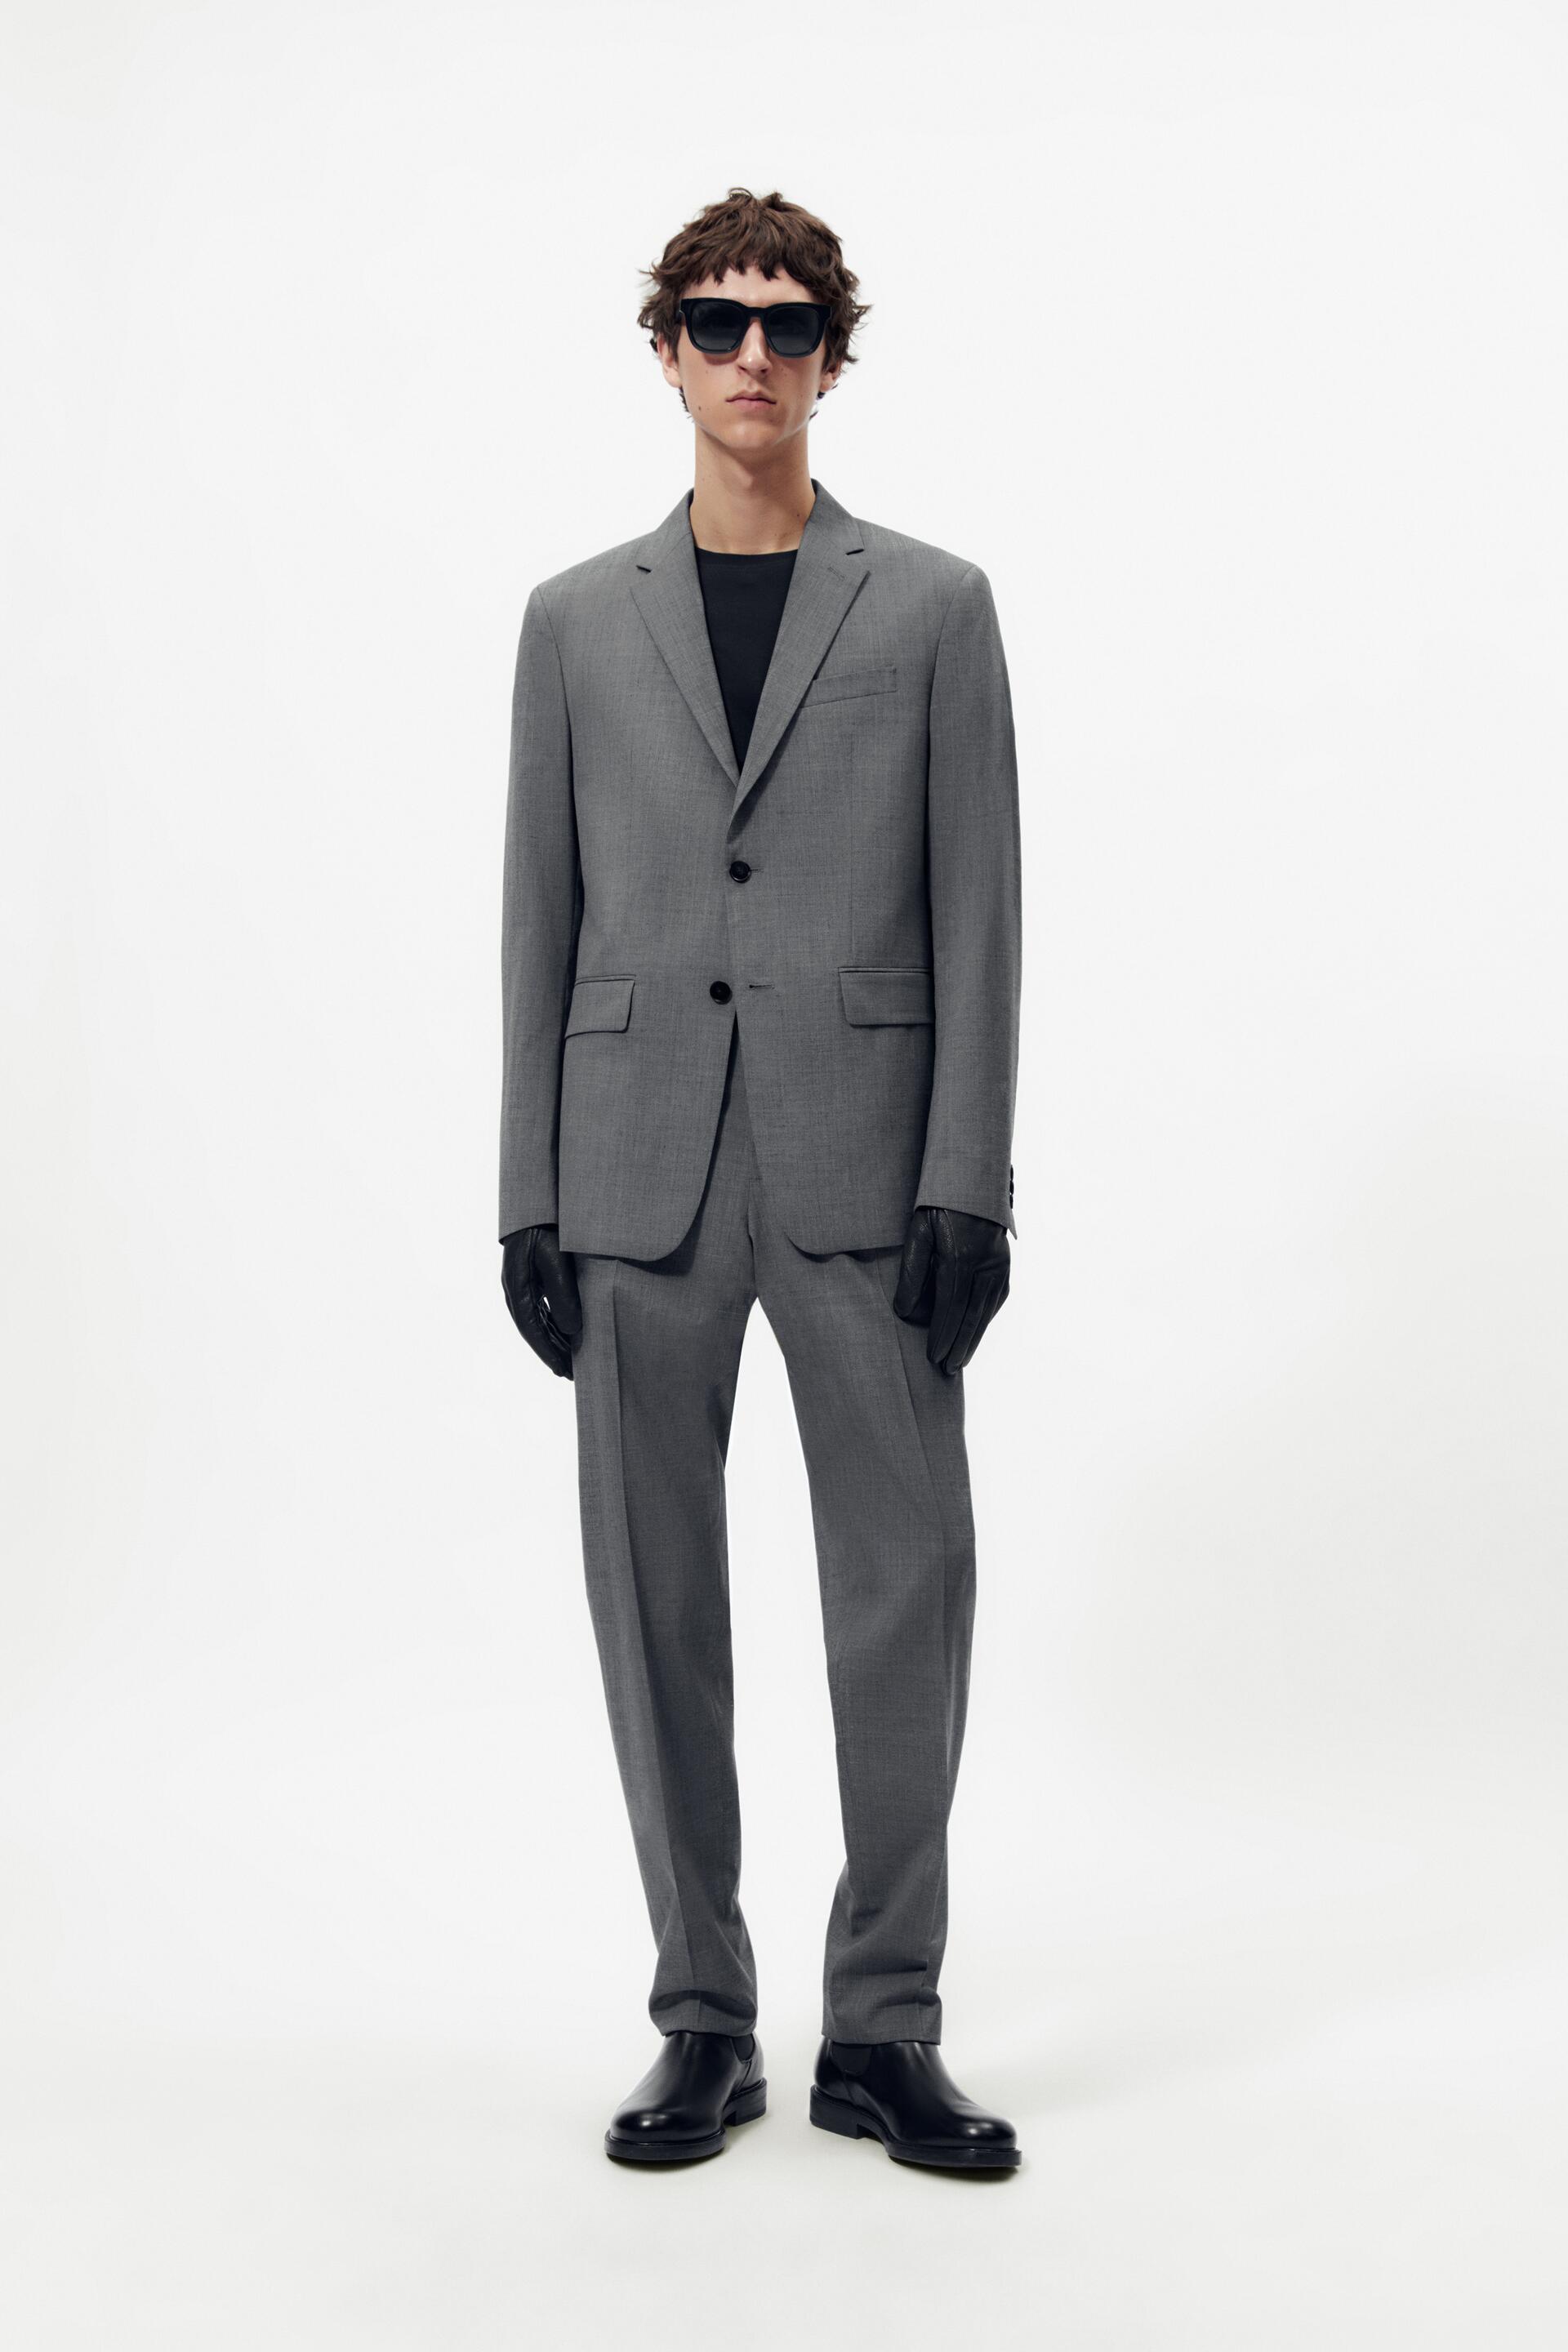 Zara 100% Wool Suit Jacket - Big Apple Buddy